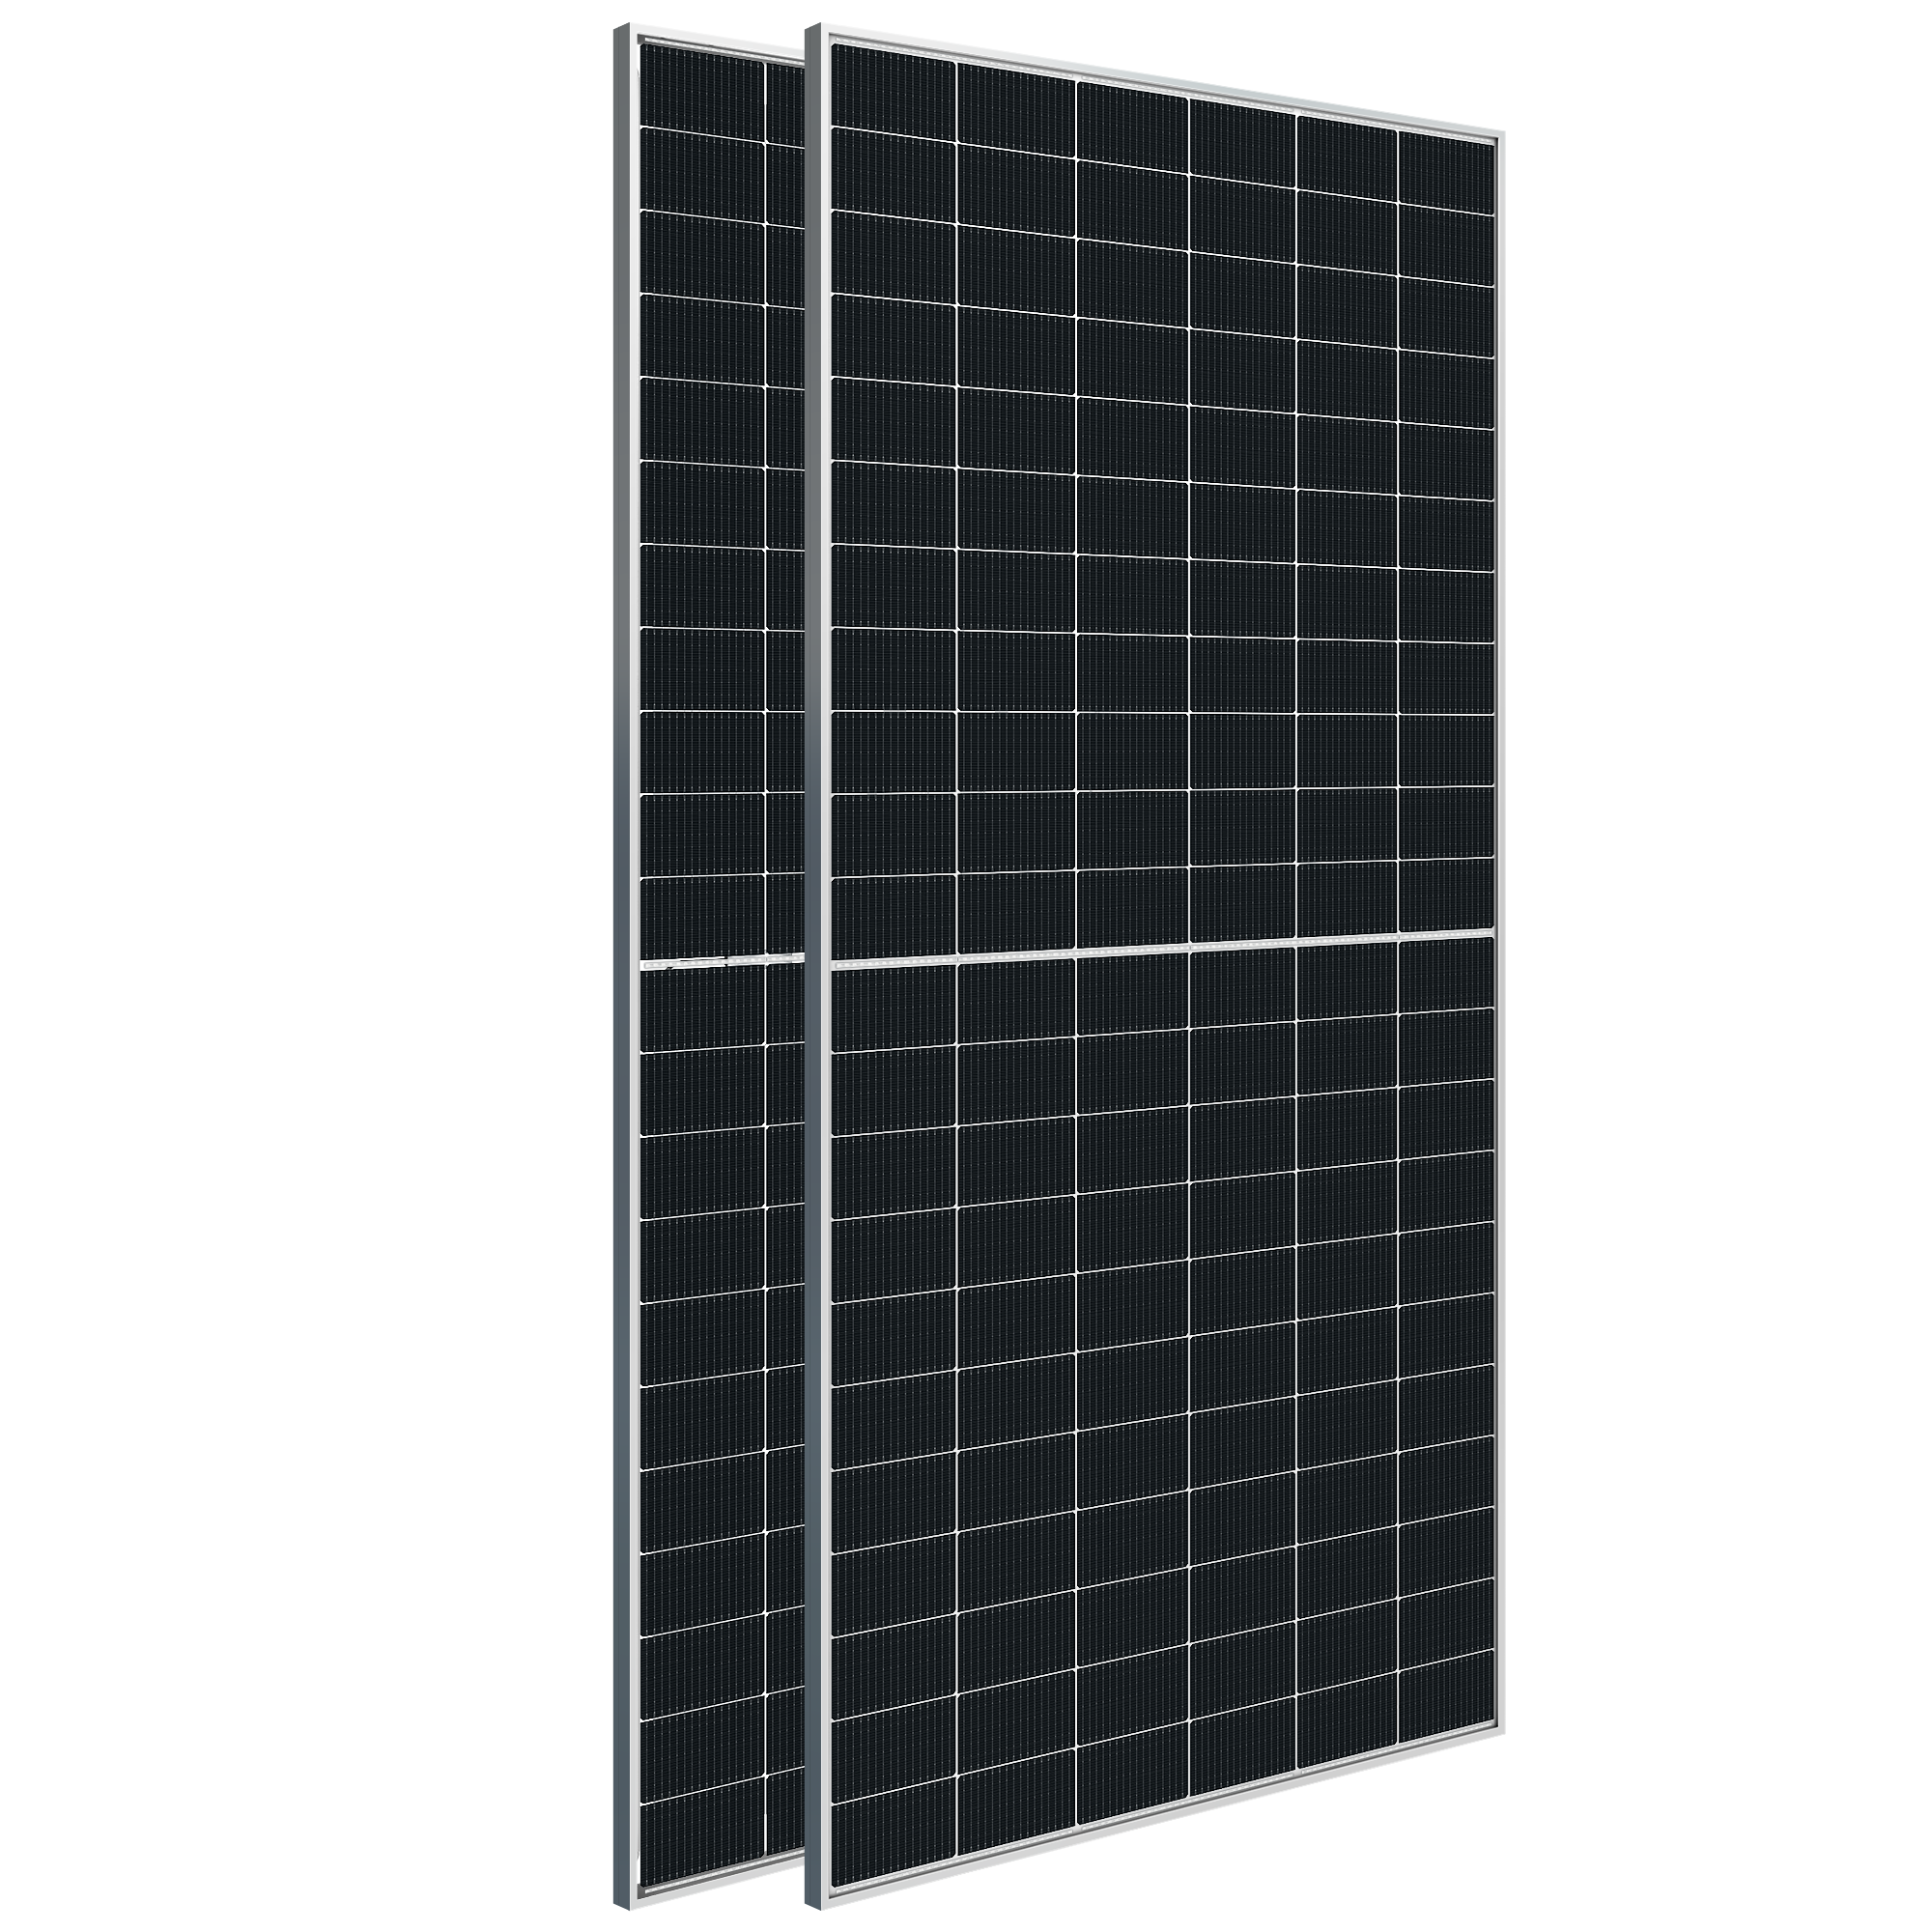 Panel solar Monocristalino 540W EGING PV